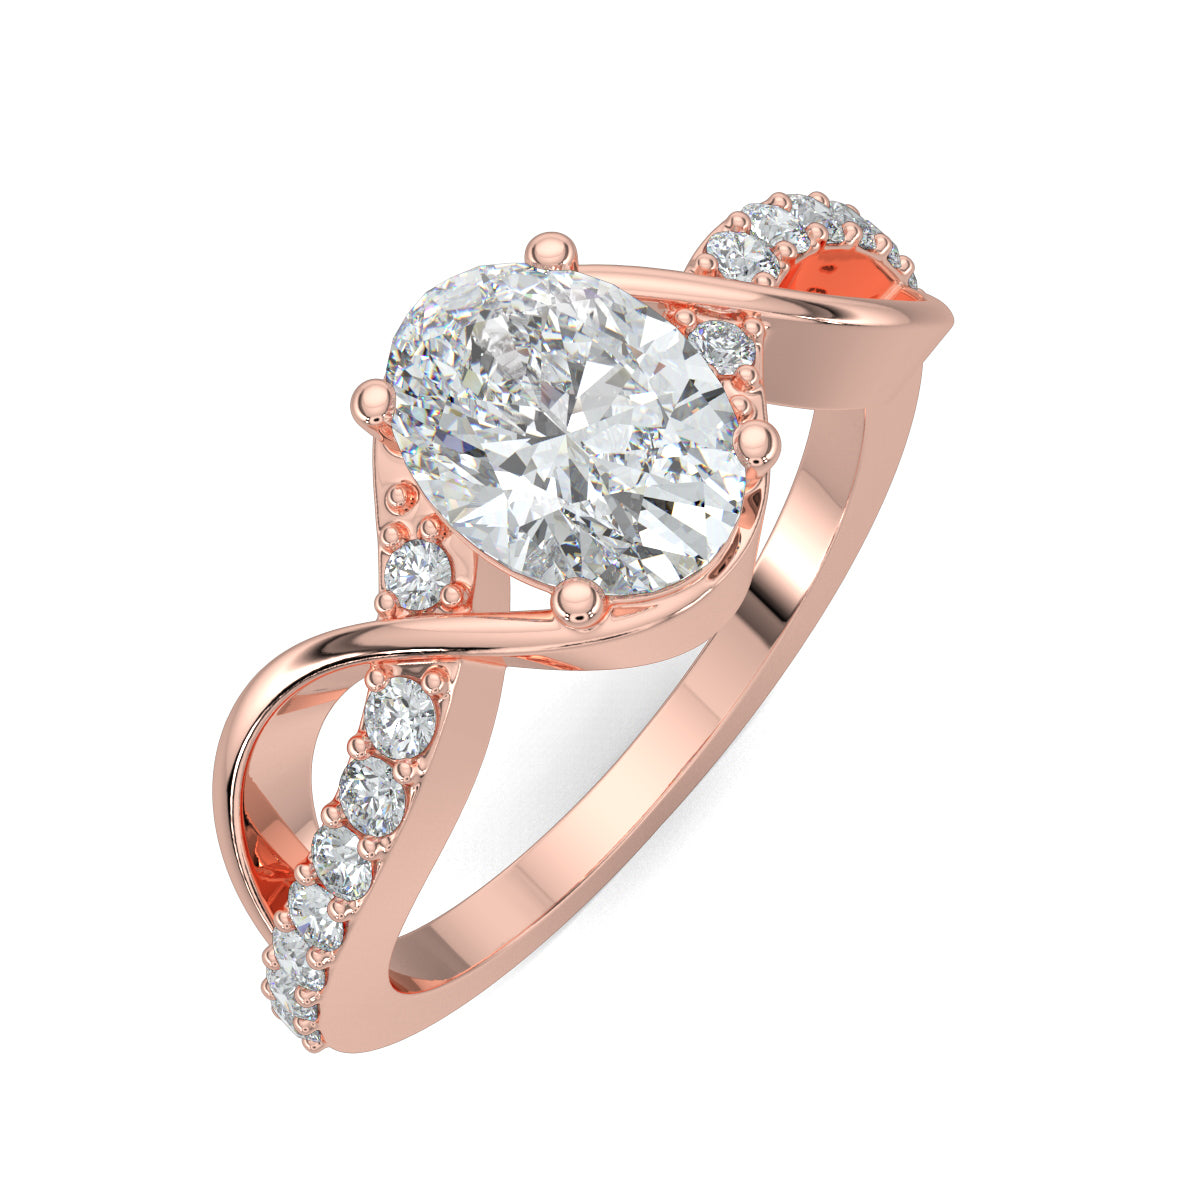 Rose Gold, Diamond Ring, Natural diamond ring, Curvaceous Diamond Ring, Everyday Diamond Ring, Lab-Grown Diamonds, Oval Diamond, Intertwining Bands, Ethical Jewelry, Sustainable Luxury, Diamond Jewelry